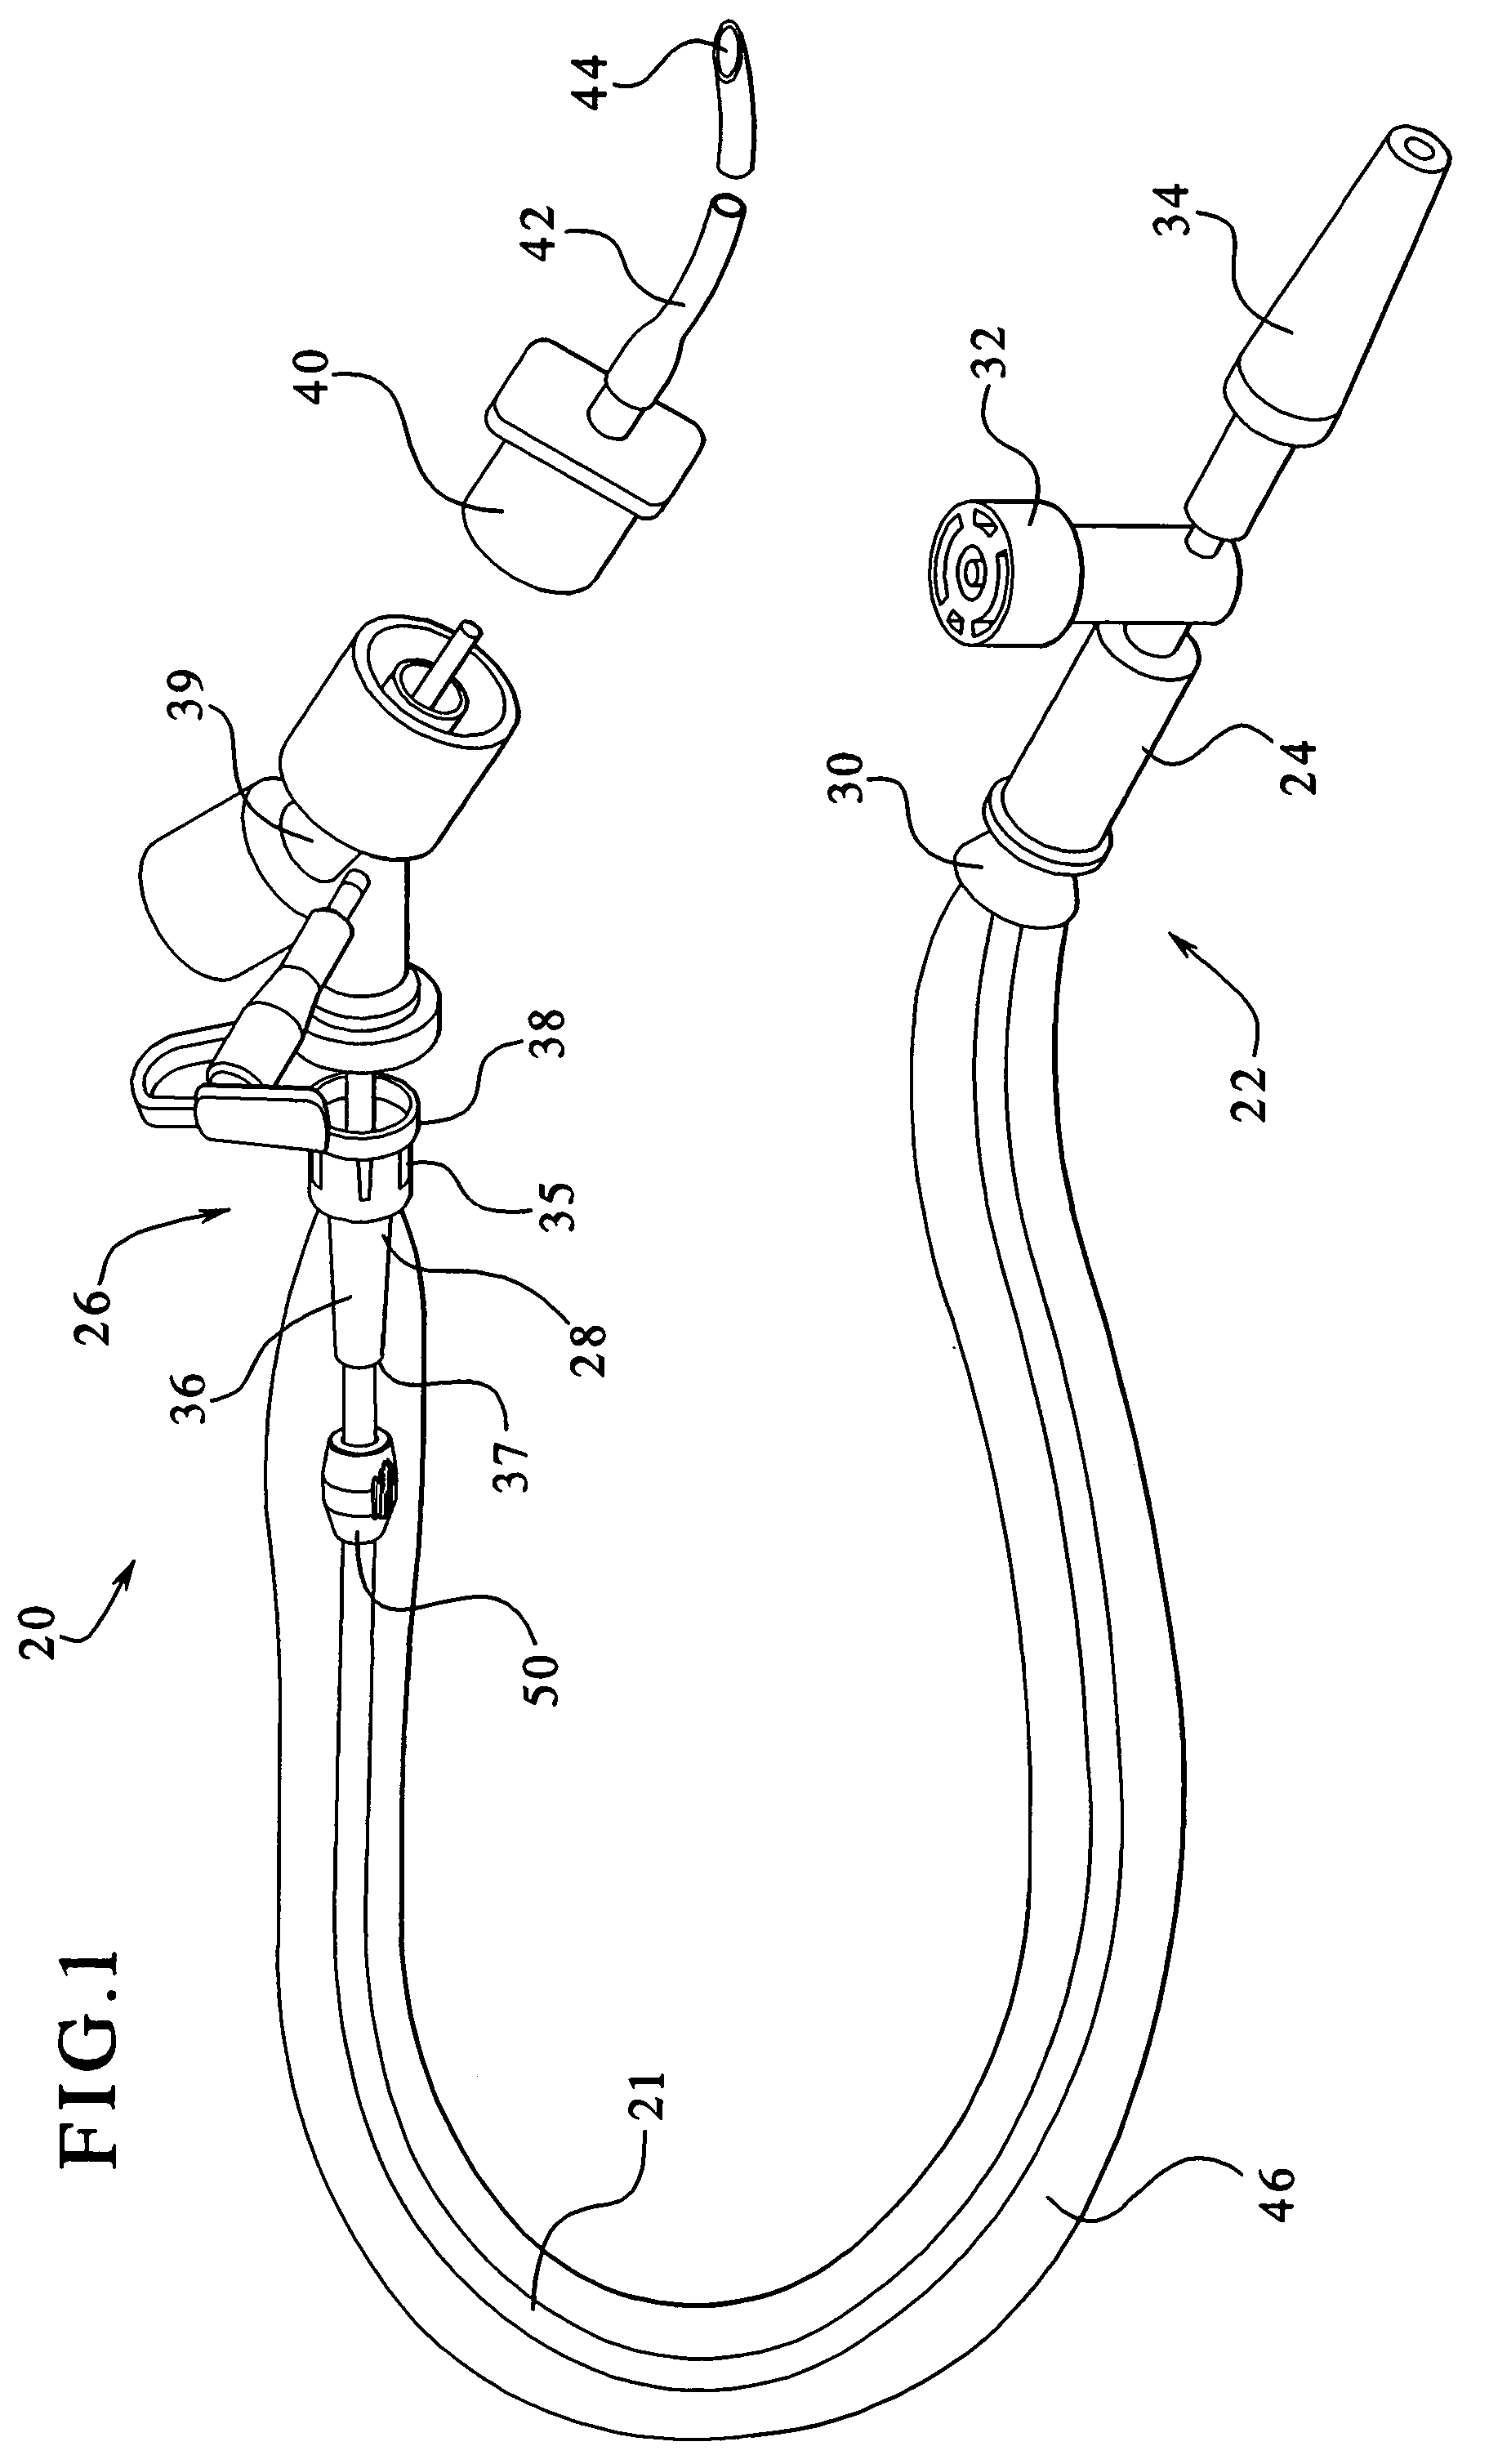 Catheter having insertion control mechanism